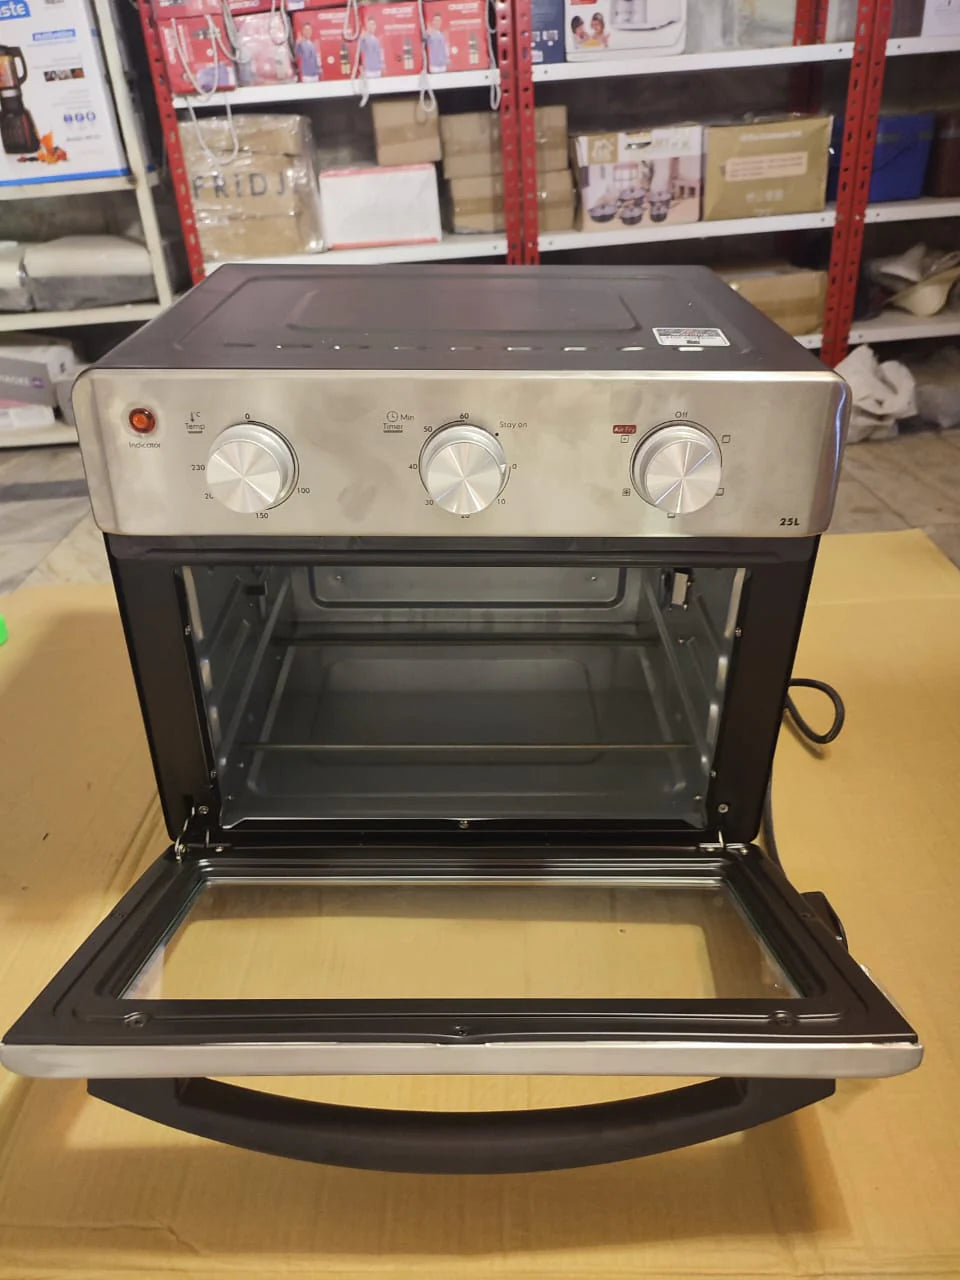 Uk 25 L Multifunction Oven/Air Fryer